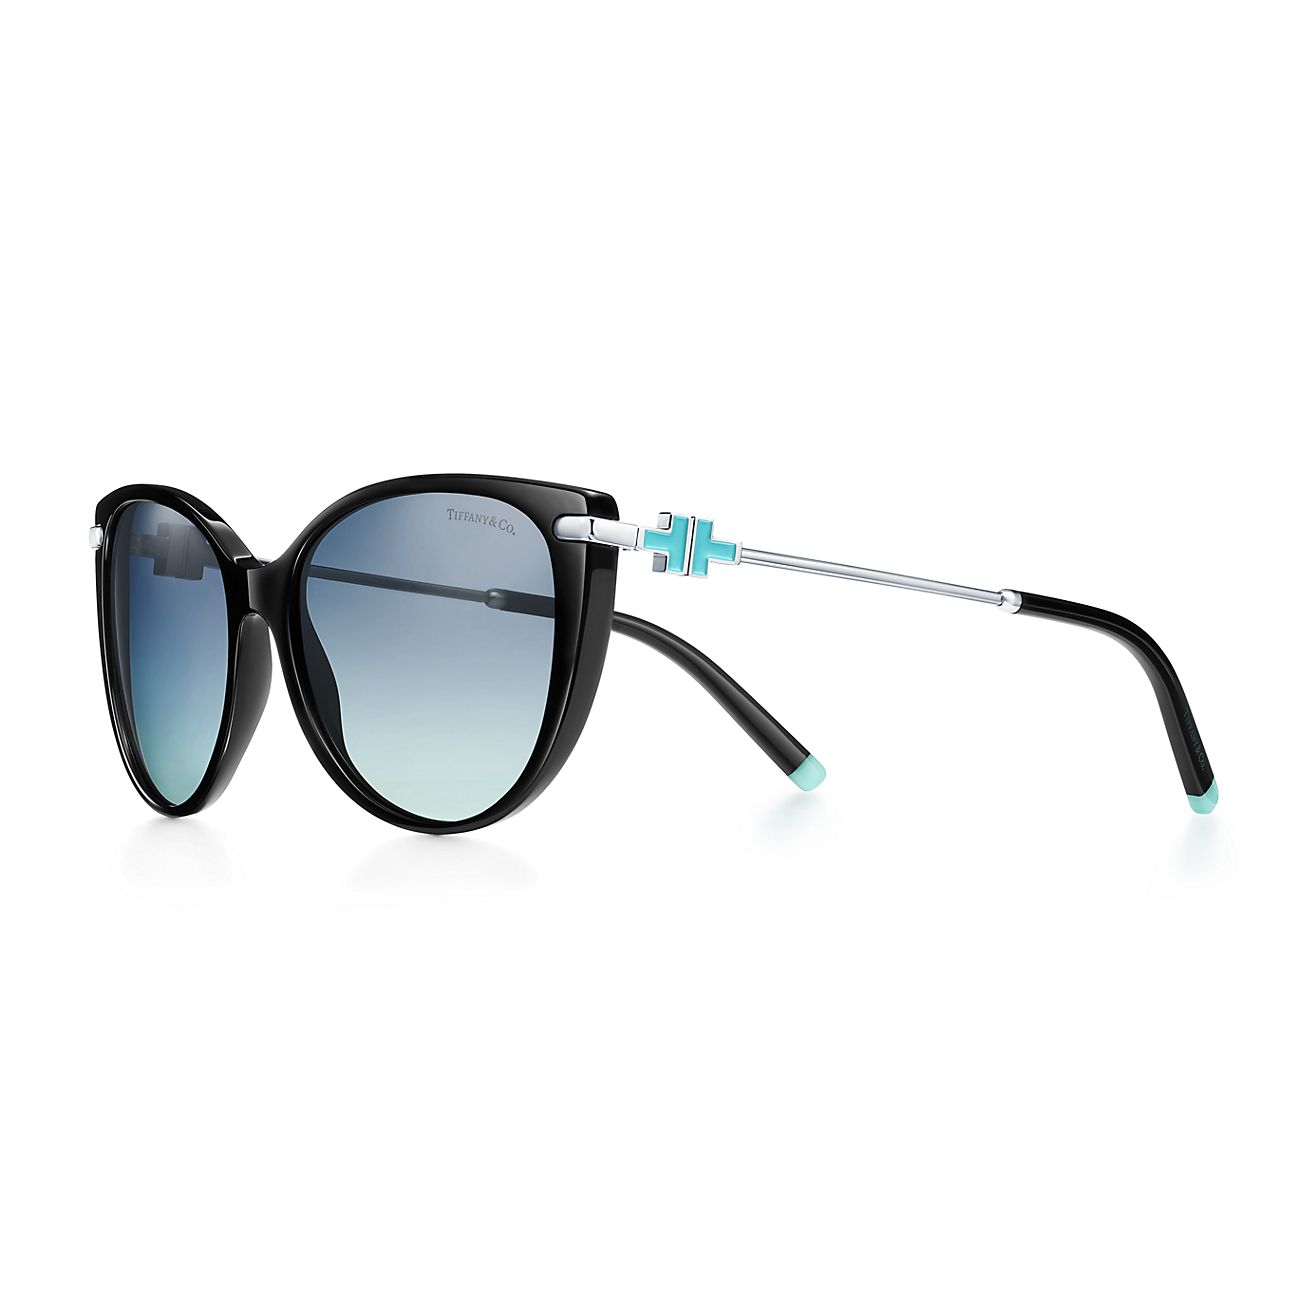 Tiffany T Cat Eye Sunglasses in Black Acetate with Tiffany Blue® | Tiffany & Co.